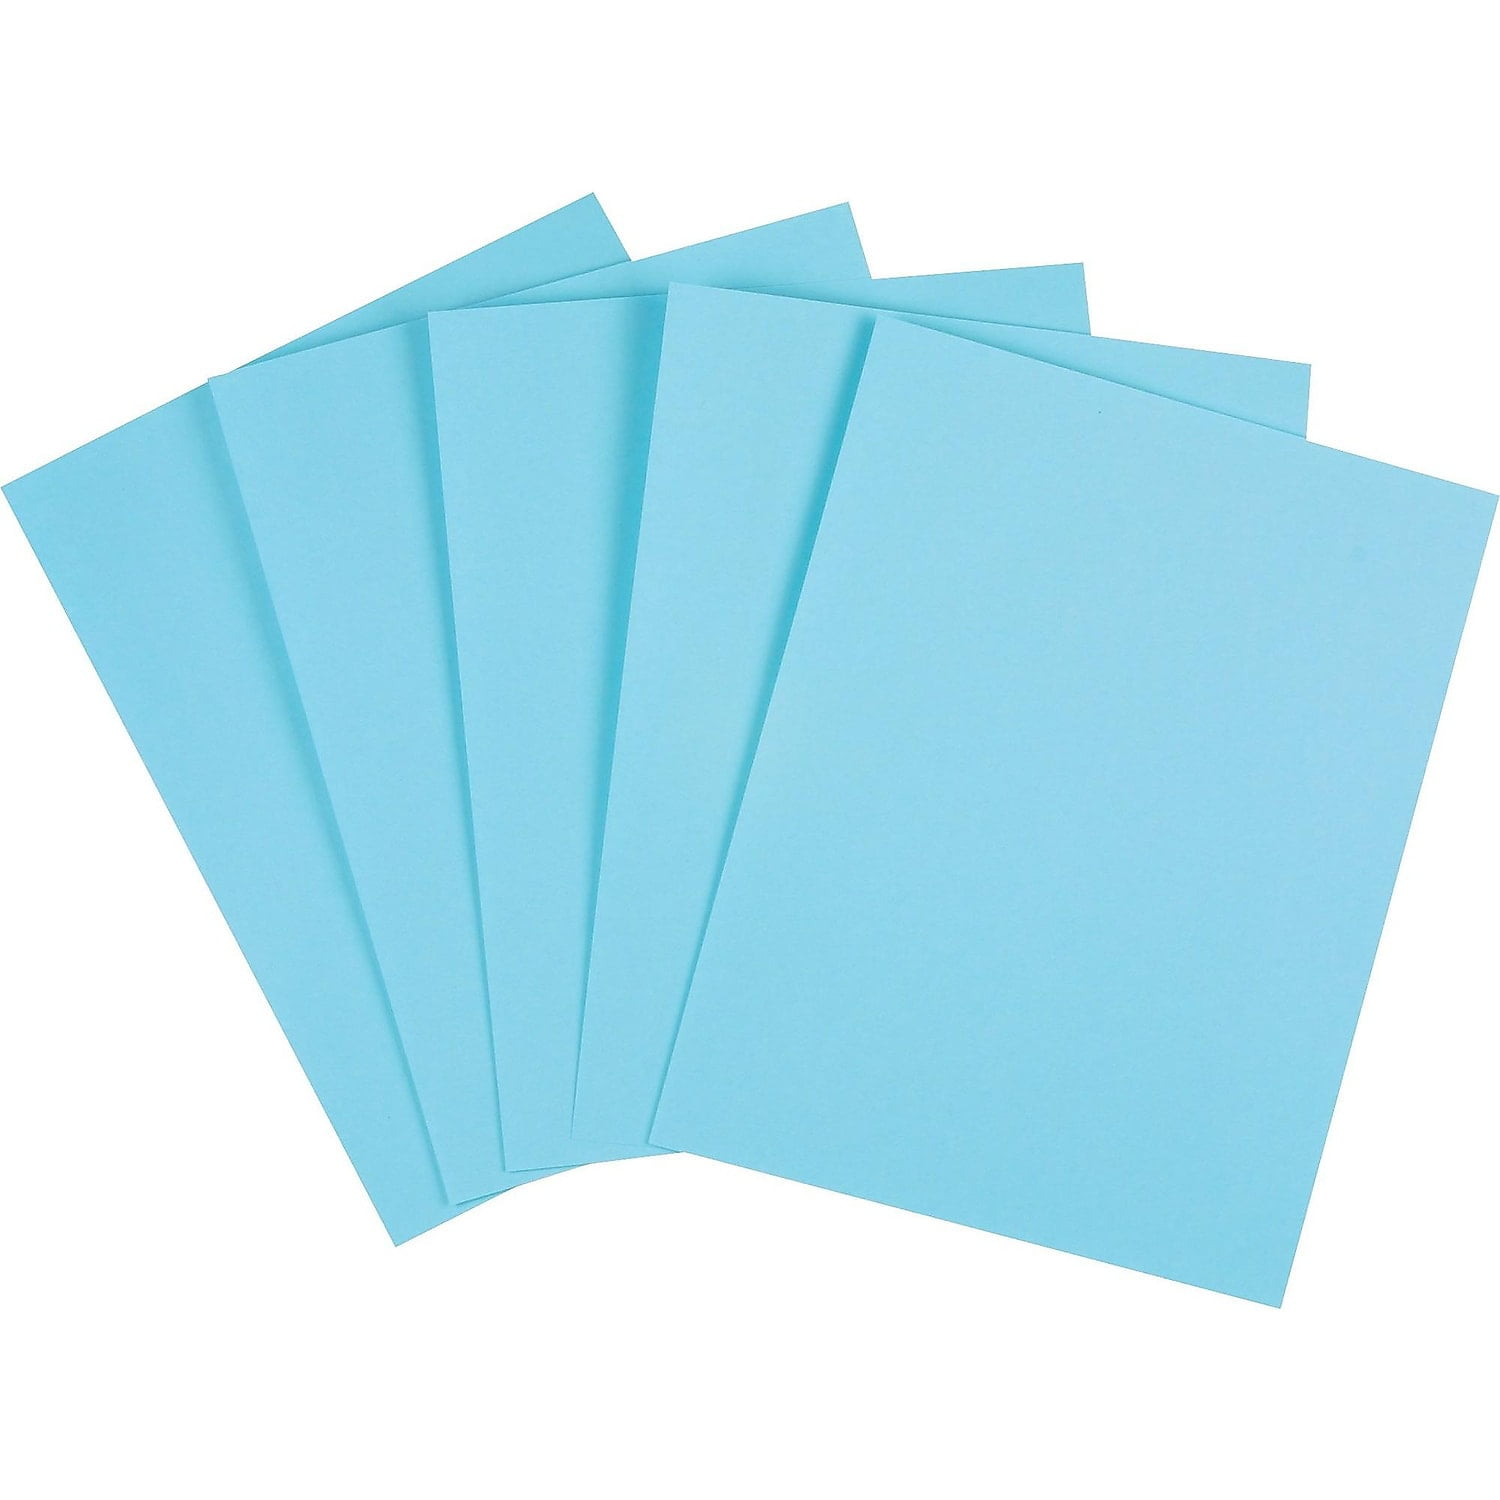 Staples Cardstock Paper 110 lbs 8.5 x 11 Blue 250/Pack (49702)